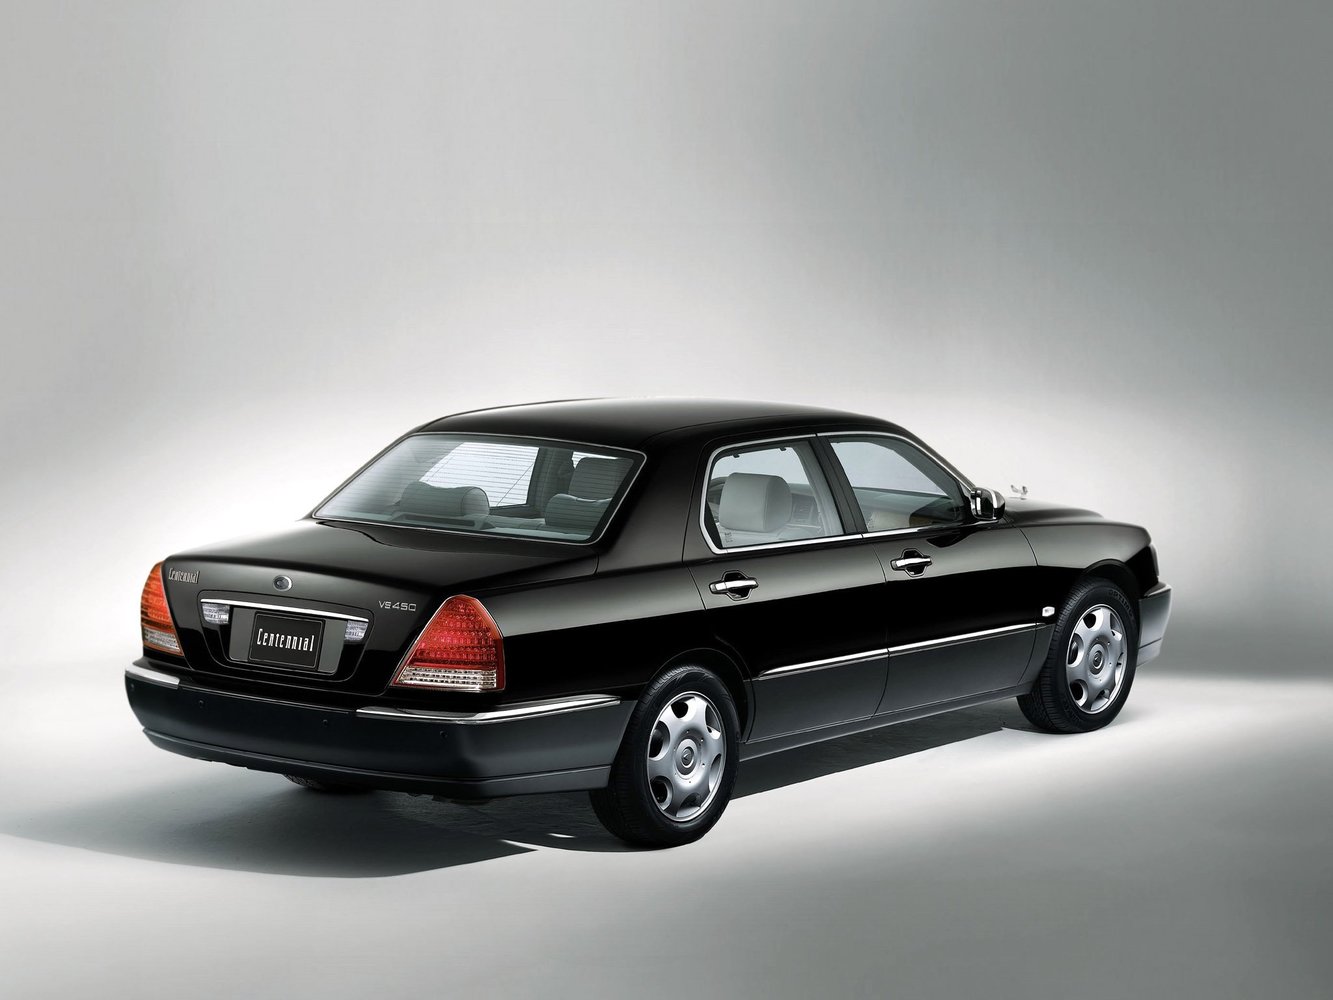 седан Hyundai Centennial 1999 - 2008г выпуска модификация 3.8 AT (252 л.с.)